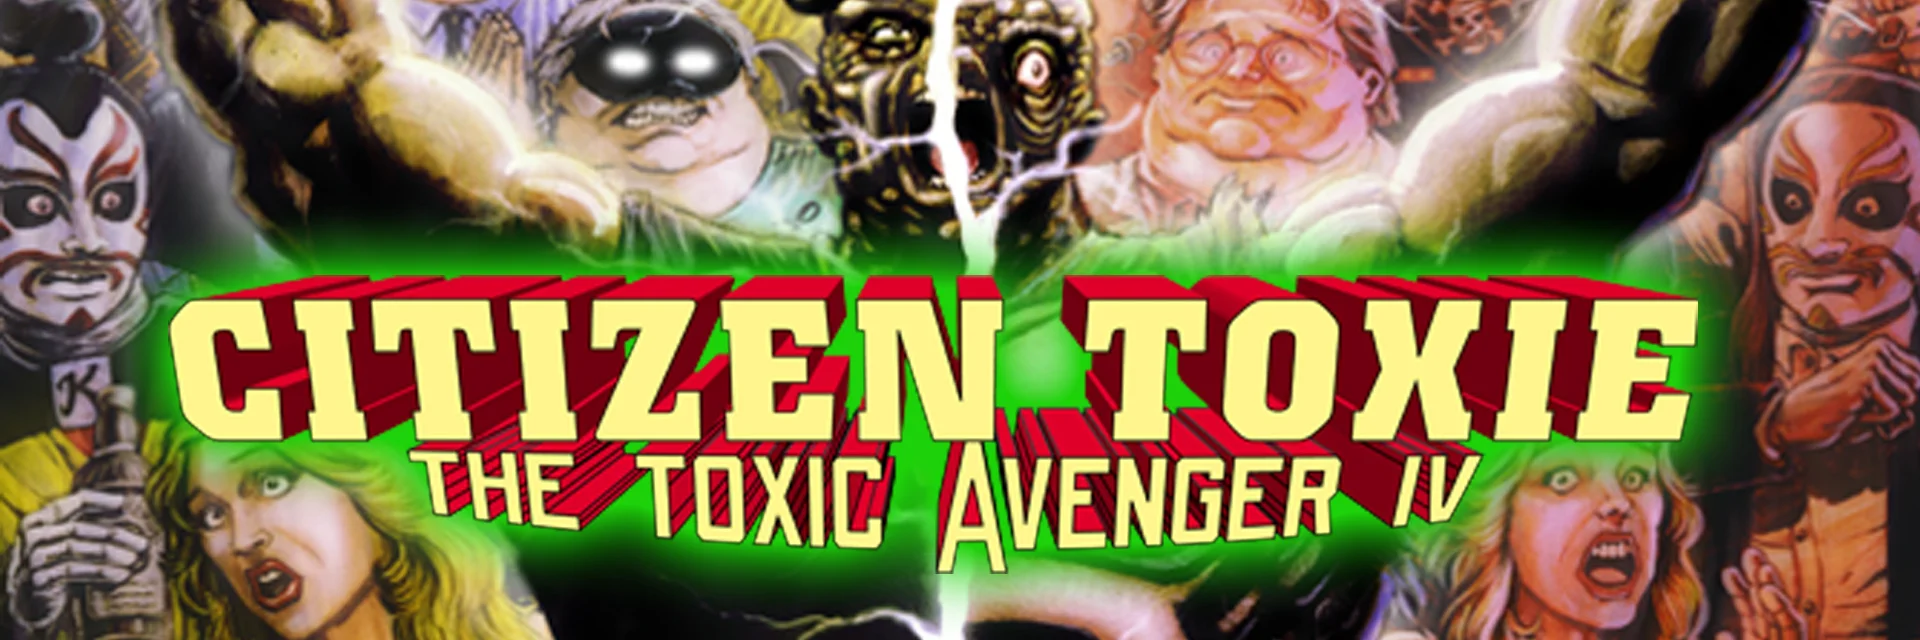 Citizen Toxie: The Toxic Avenger IV 4K 2000 big poster